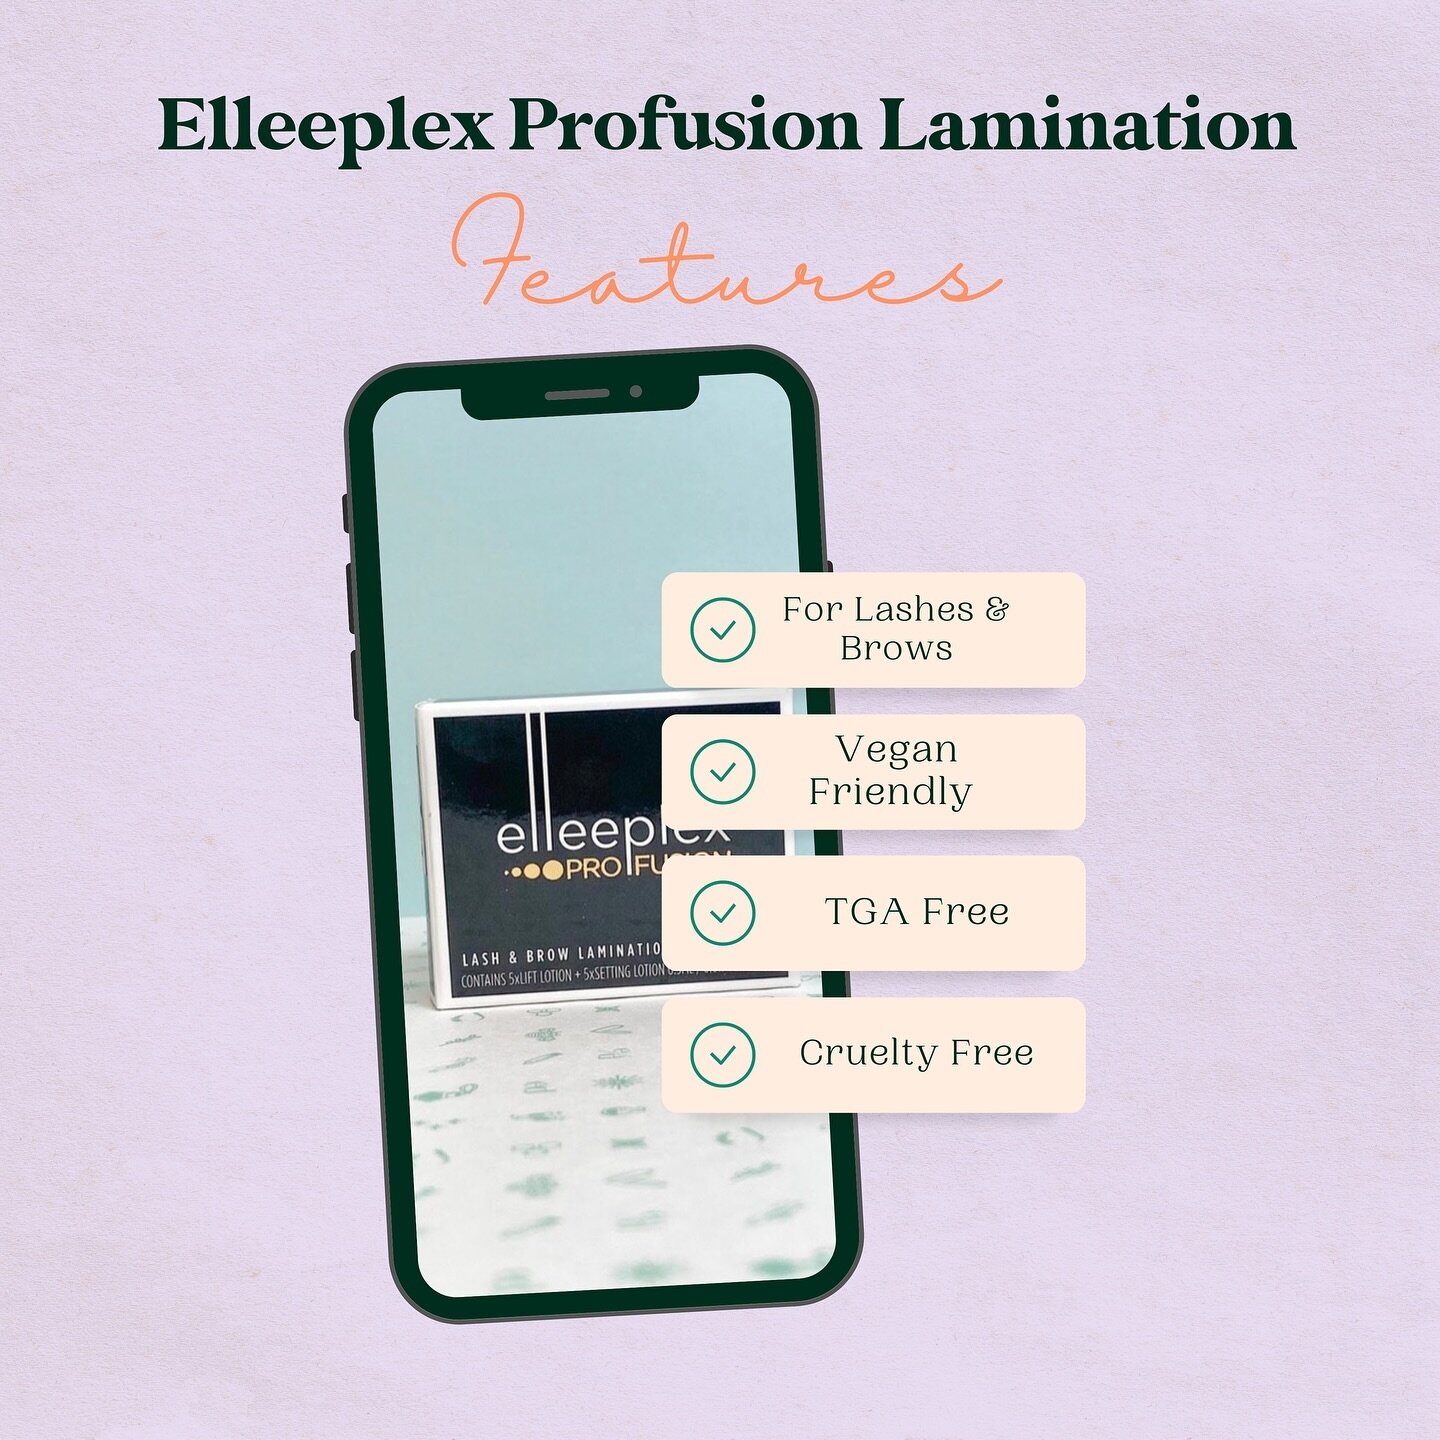 Buy Elleebana Micropore Tape Online